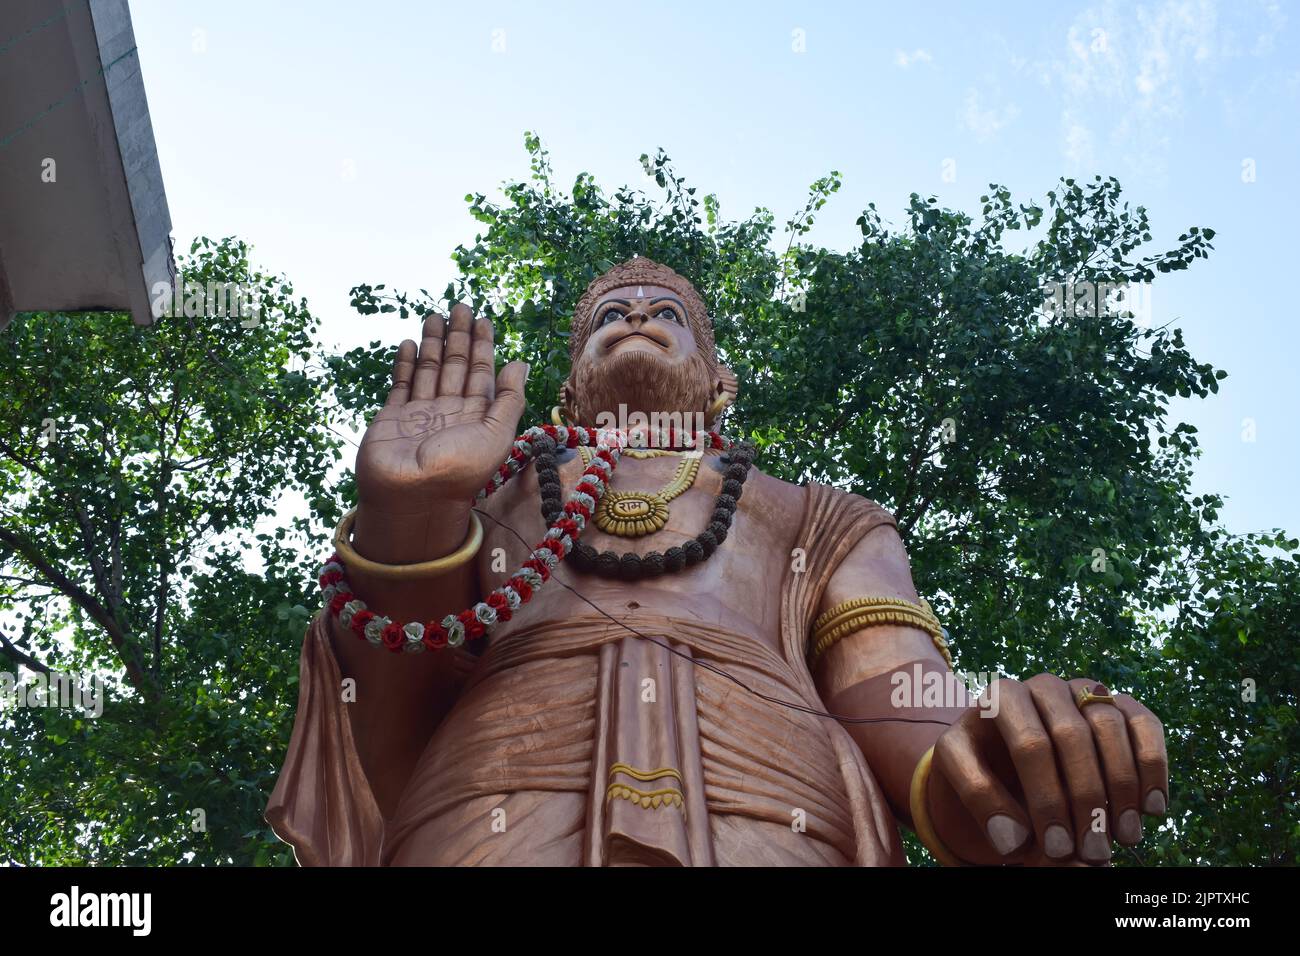 Statue of Lord Hanuman who is the Hindu god and divine vanara (monkey) companion of the god Rama. Stock Photo